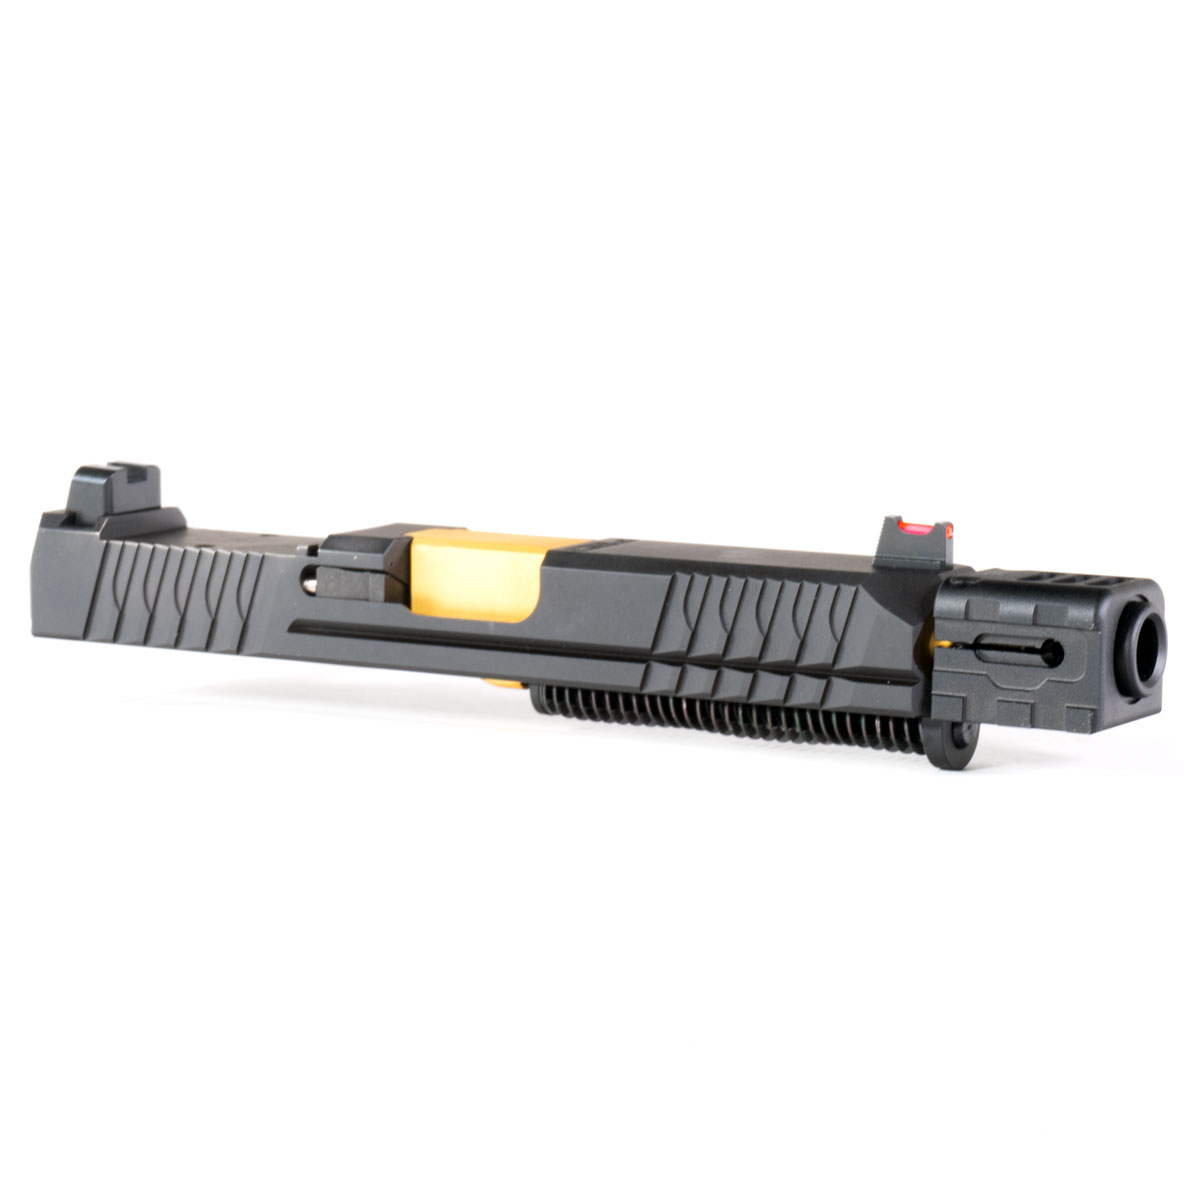 MMC 'Patlama w/ Sylvan Arms Compensator' 9mm Complete Slide Kit - Glock 19 Gen 1-3 Compatible